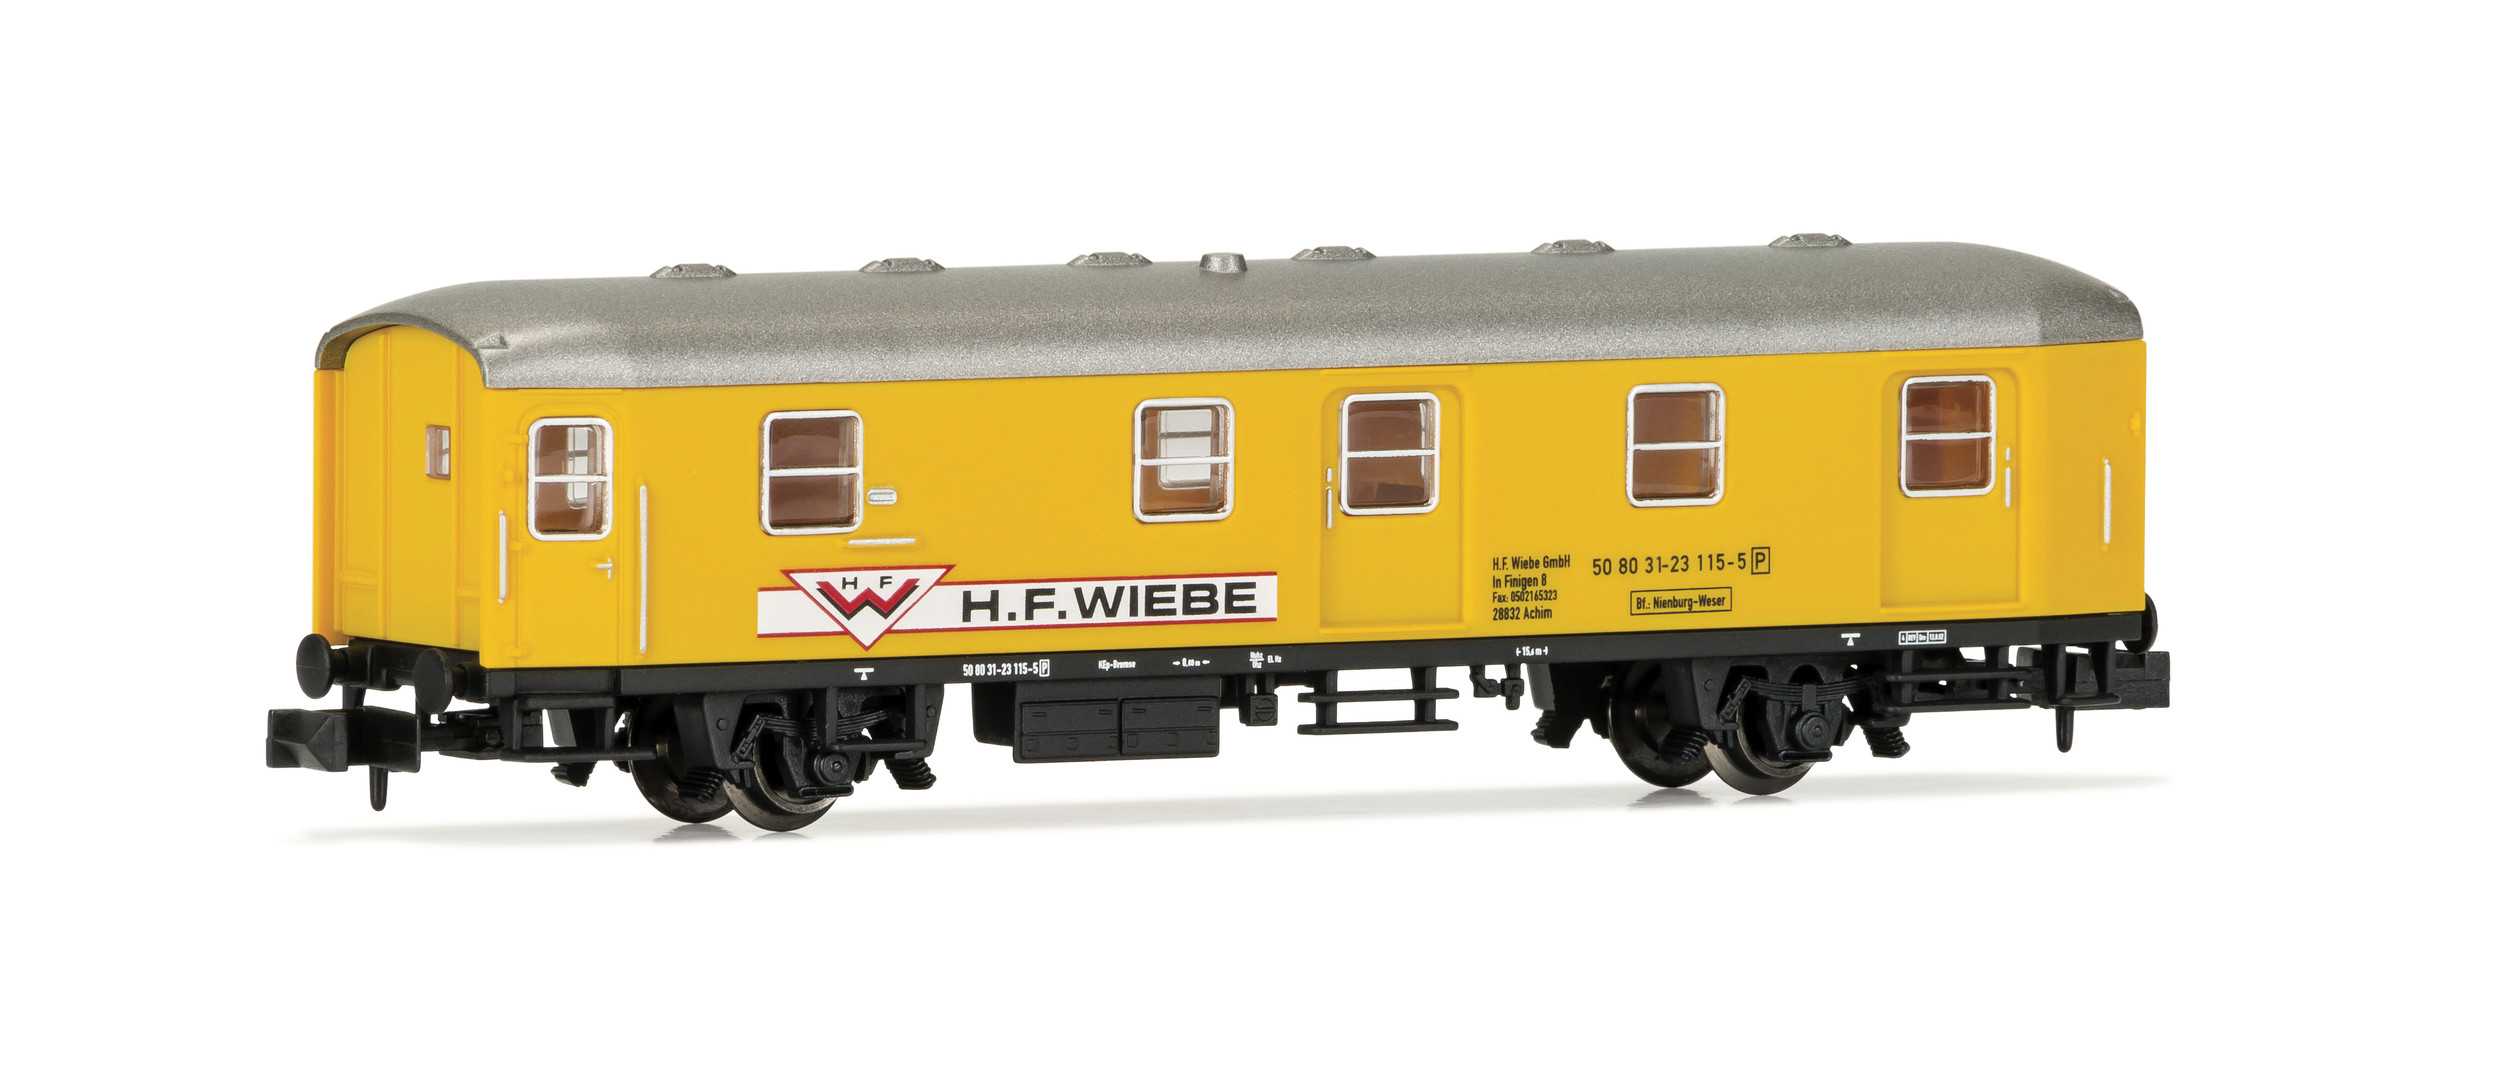 Trains miniatures : locomotives et autorail - WIEBE autocar de constru